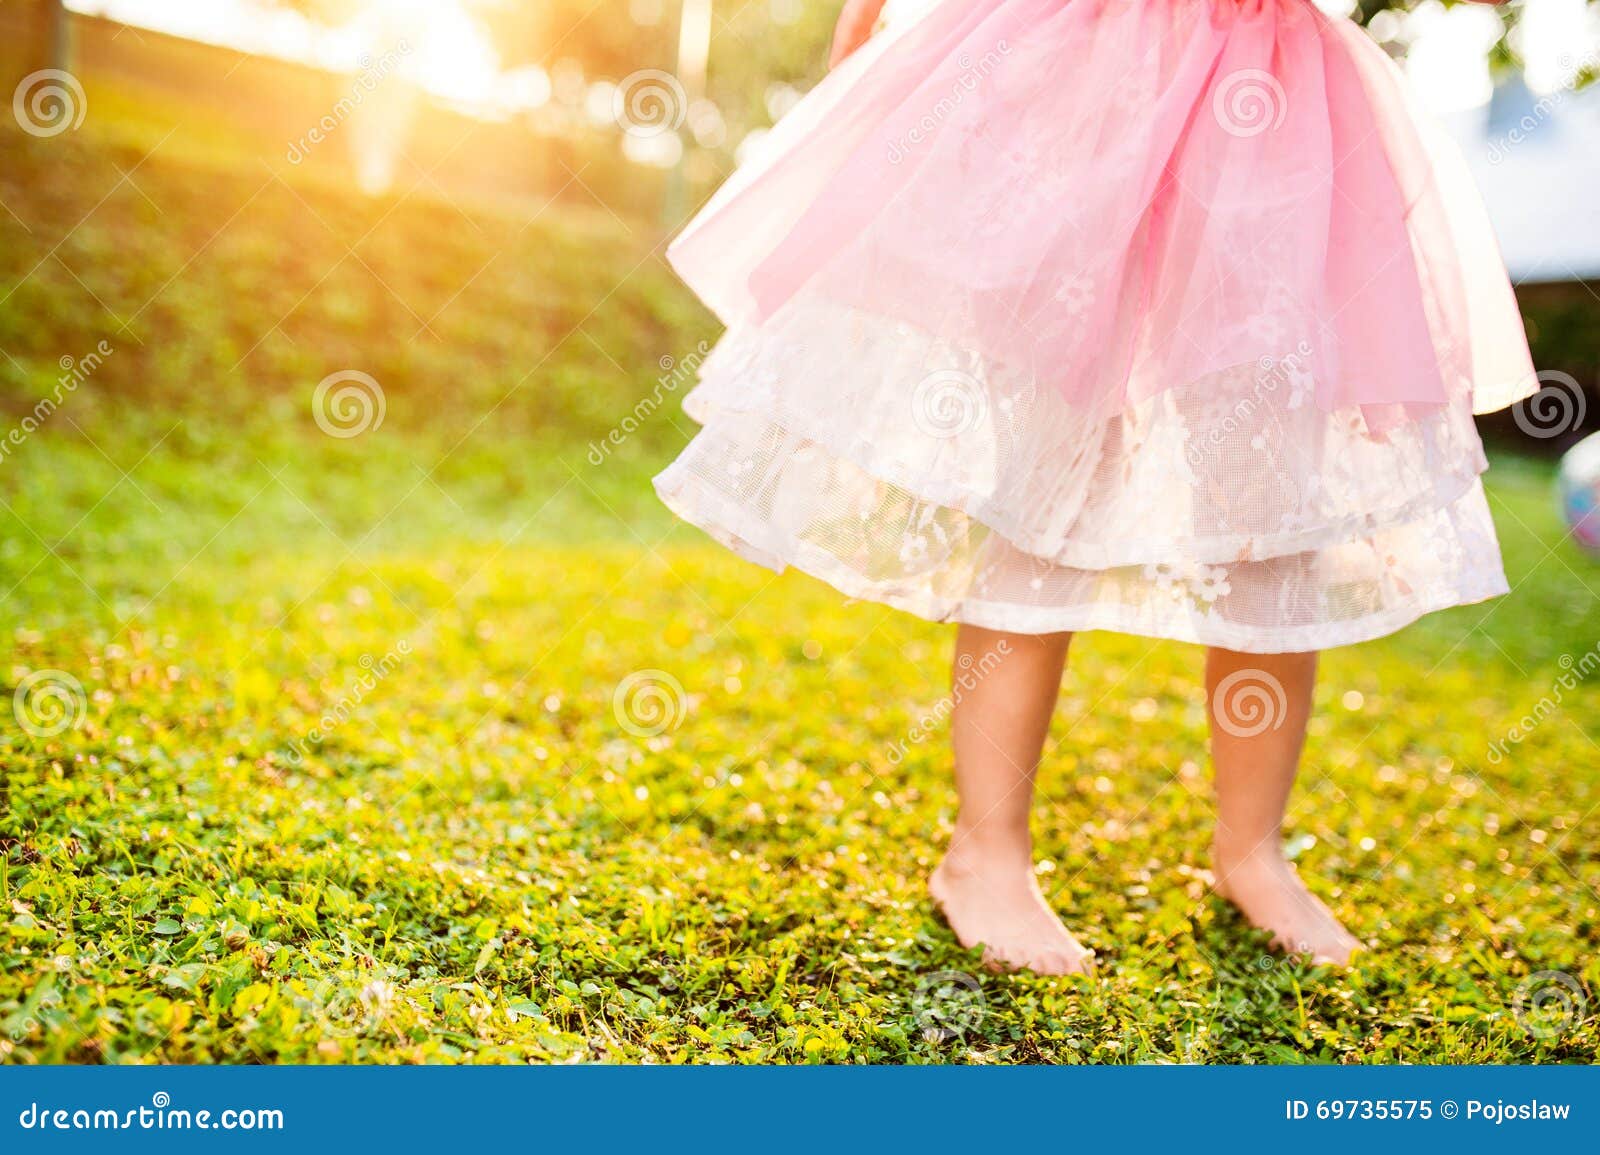 https://thumbs.dreamstime.com/z/unrecognizable-girl-princess-skirt-running-sunny-garden-little-pink-barefoot-green-summer-69735575.jpg